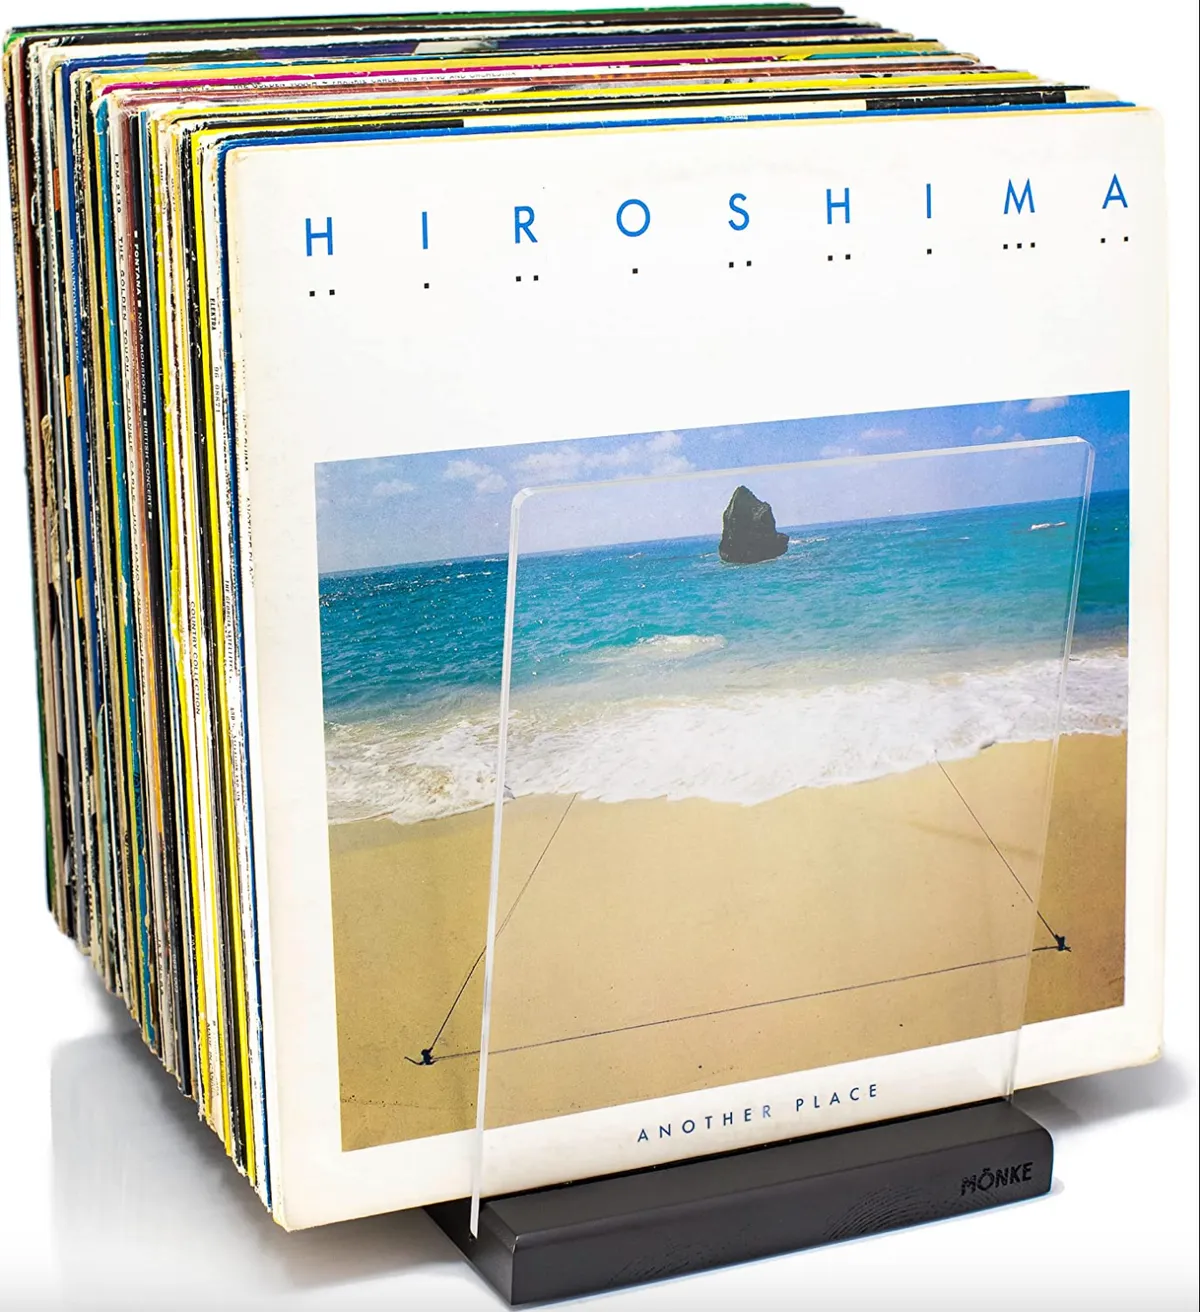 MÖNKE Premium Vinyl Record Storage